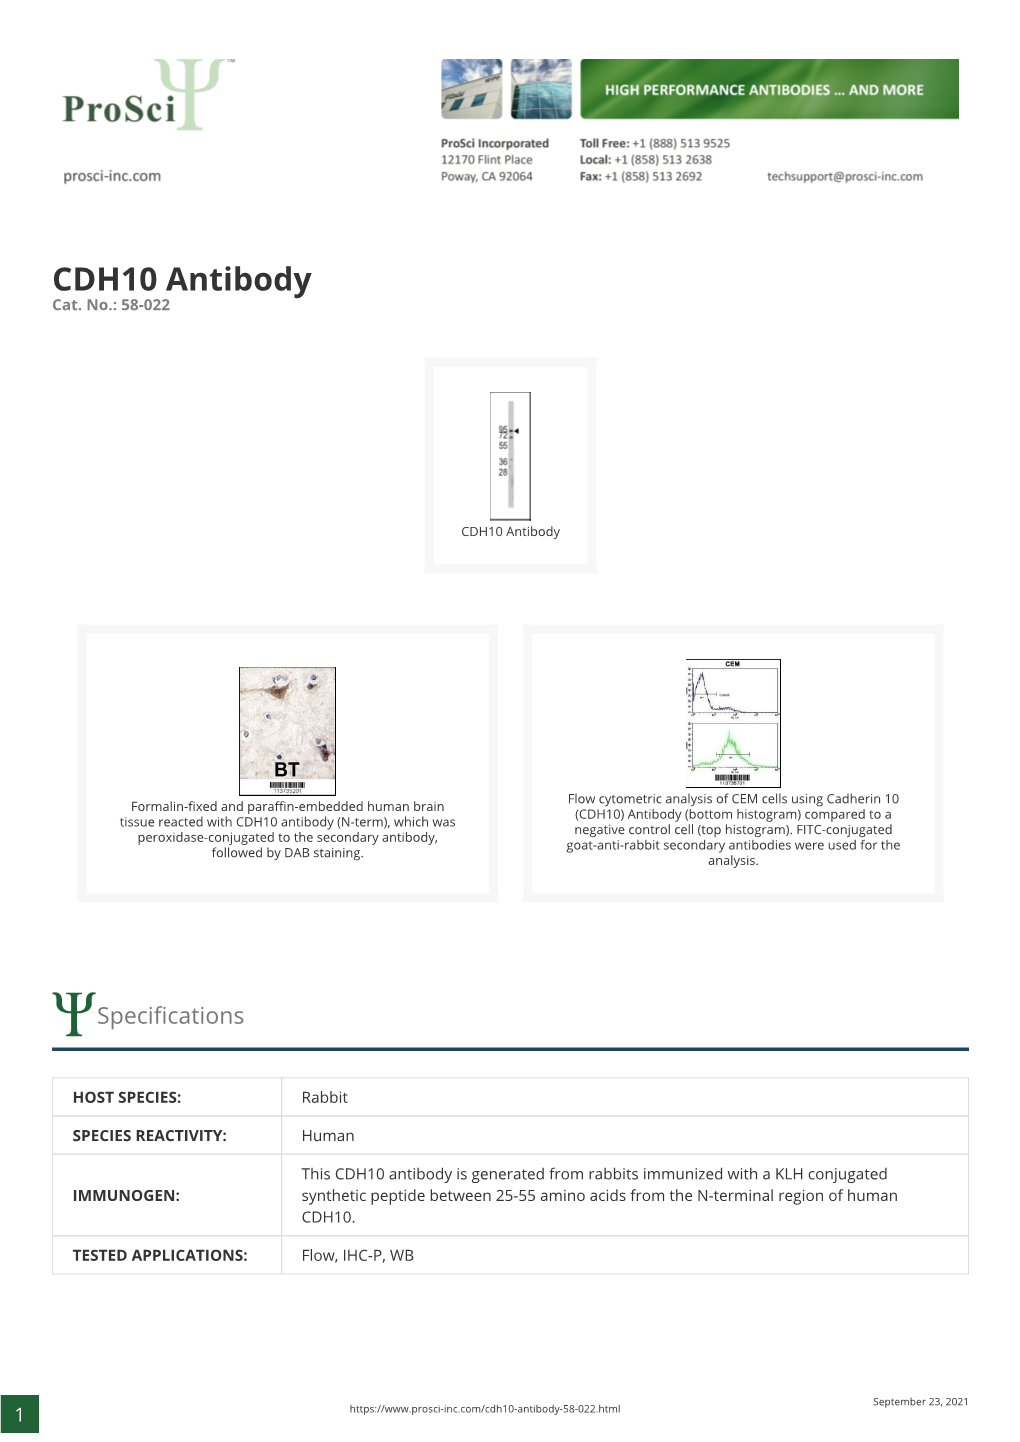 CDH10 Antibody Cat